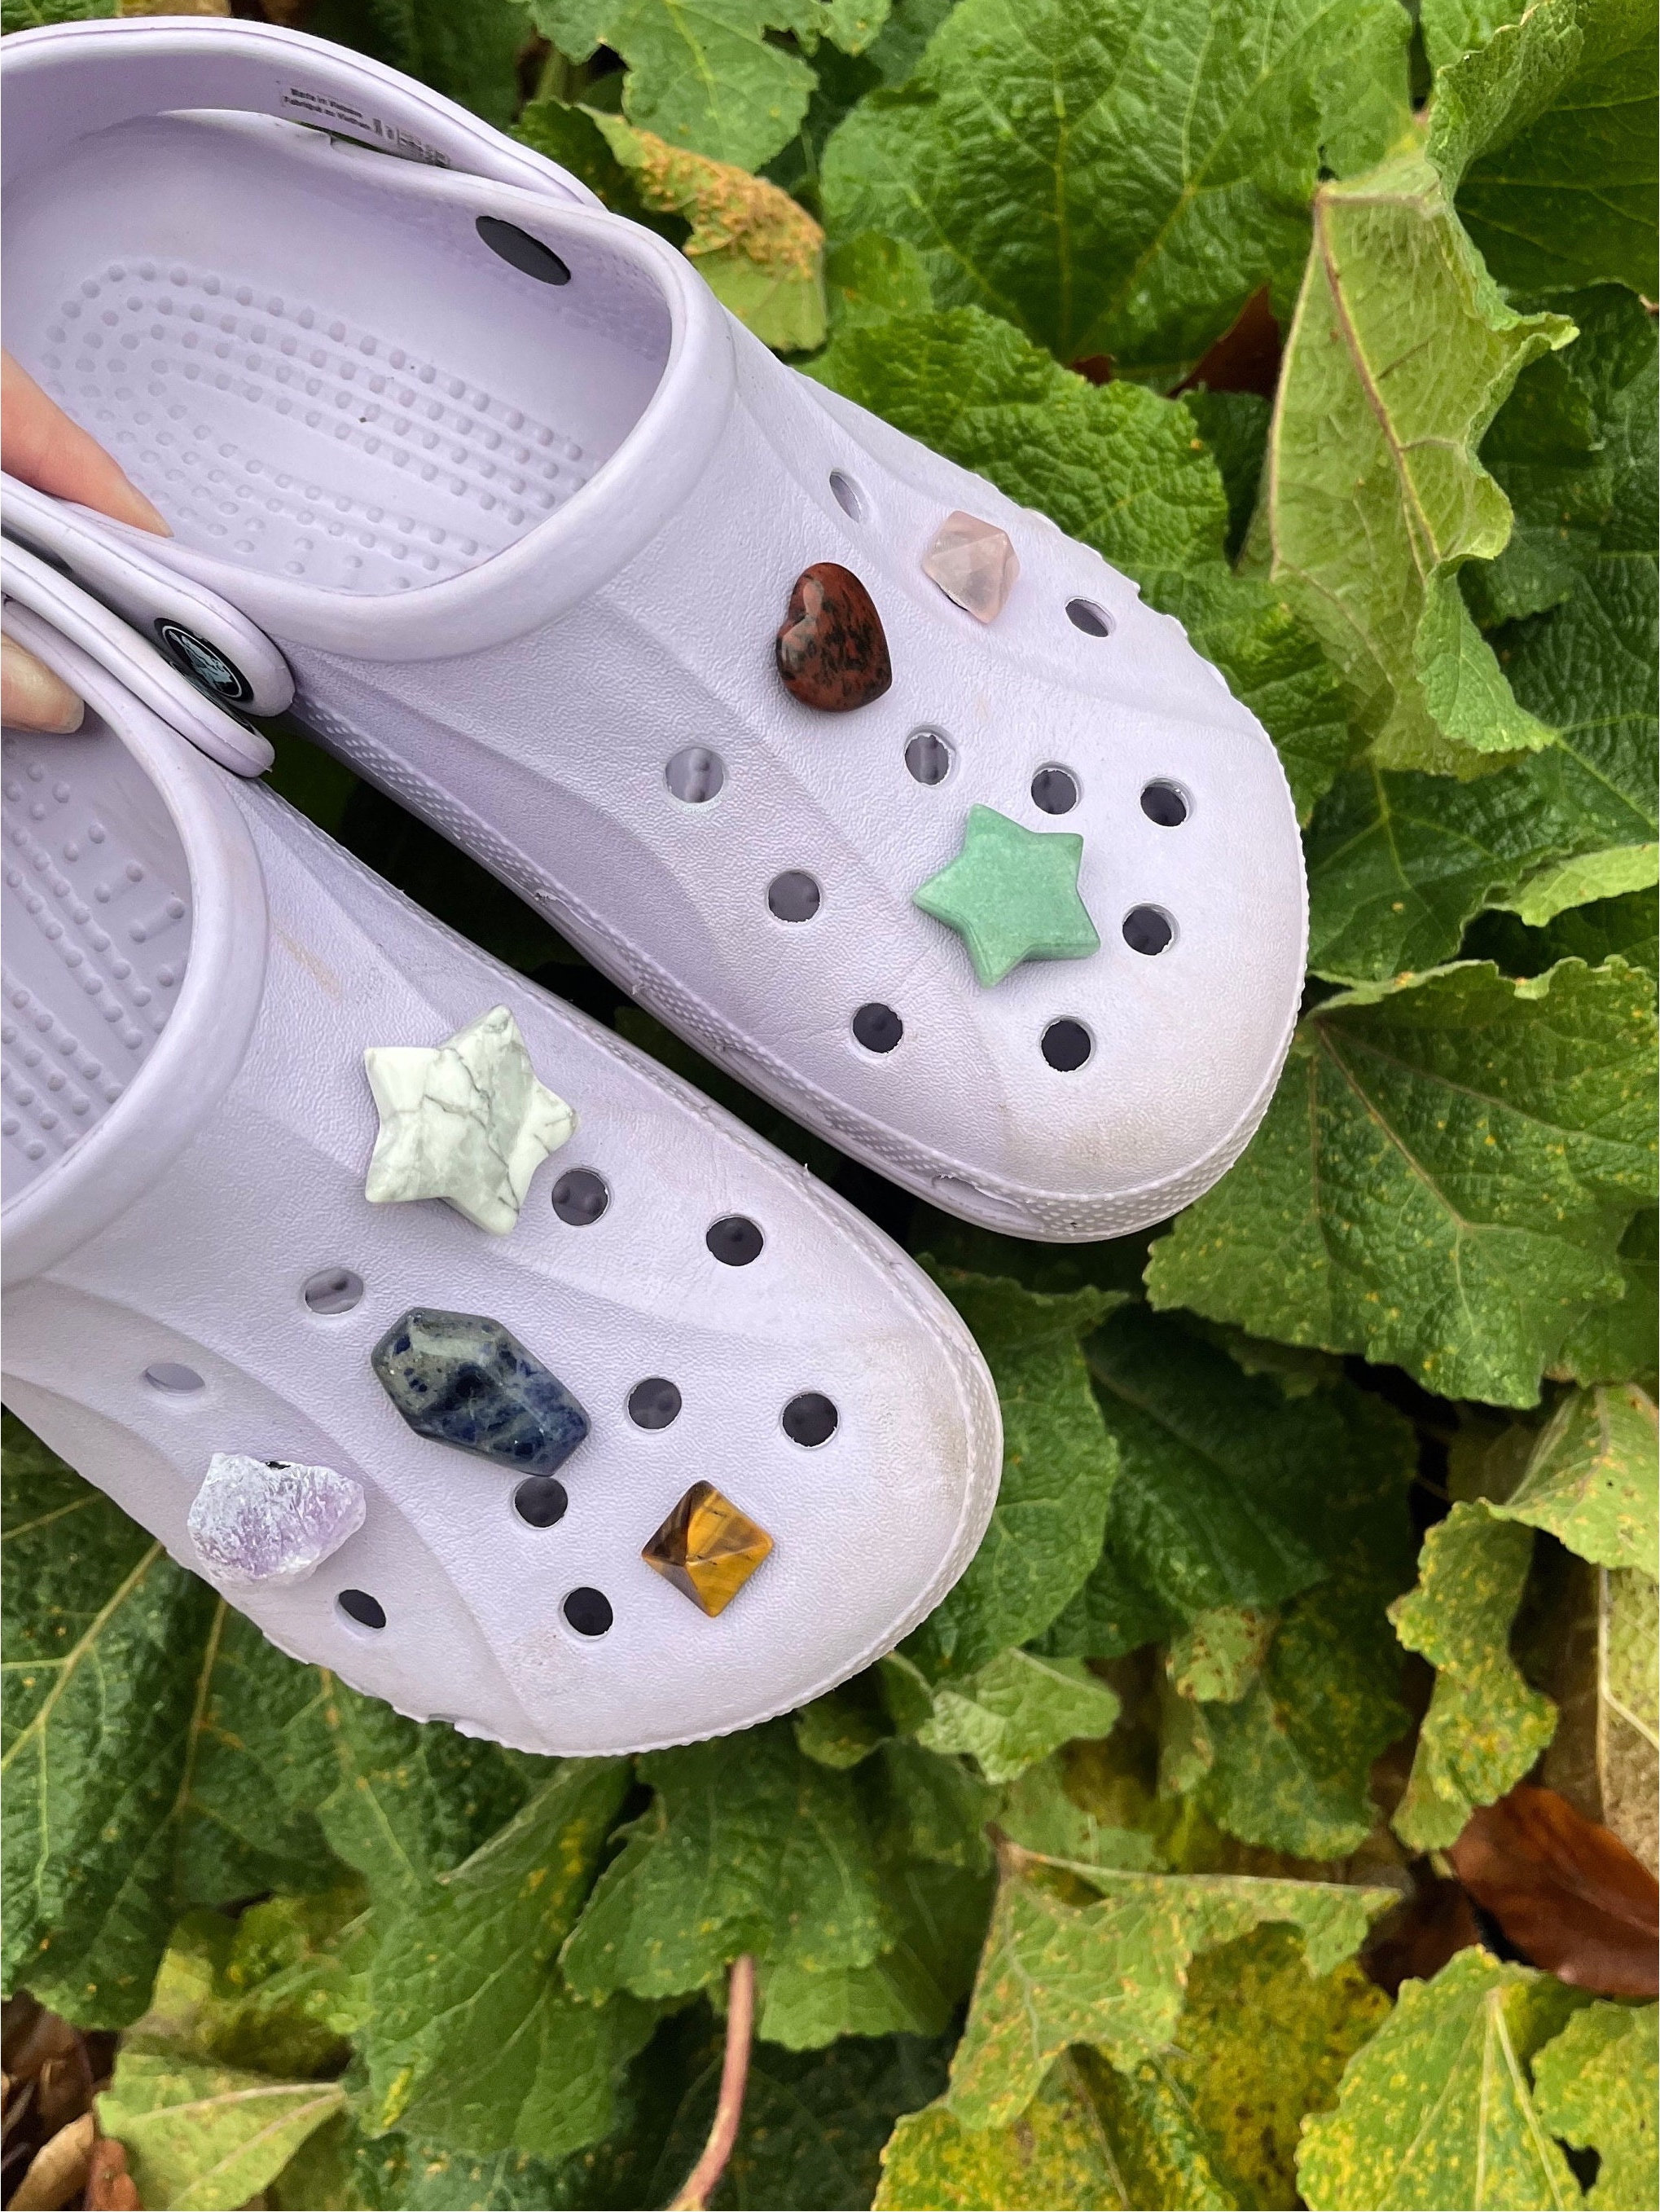 Croc-rocks Croc & Clog Shoe Buttons Moon Sculpted Crystals for Your Crocs 